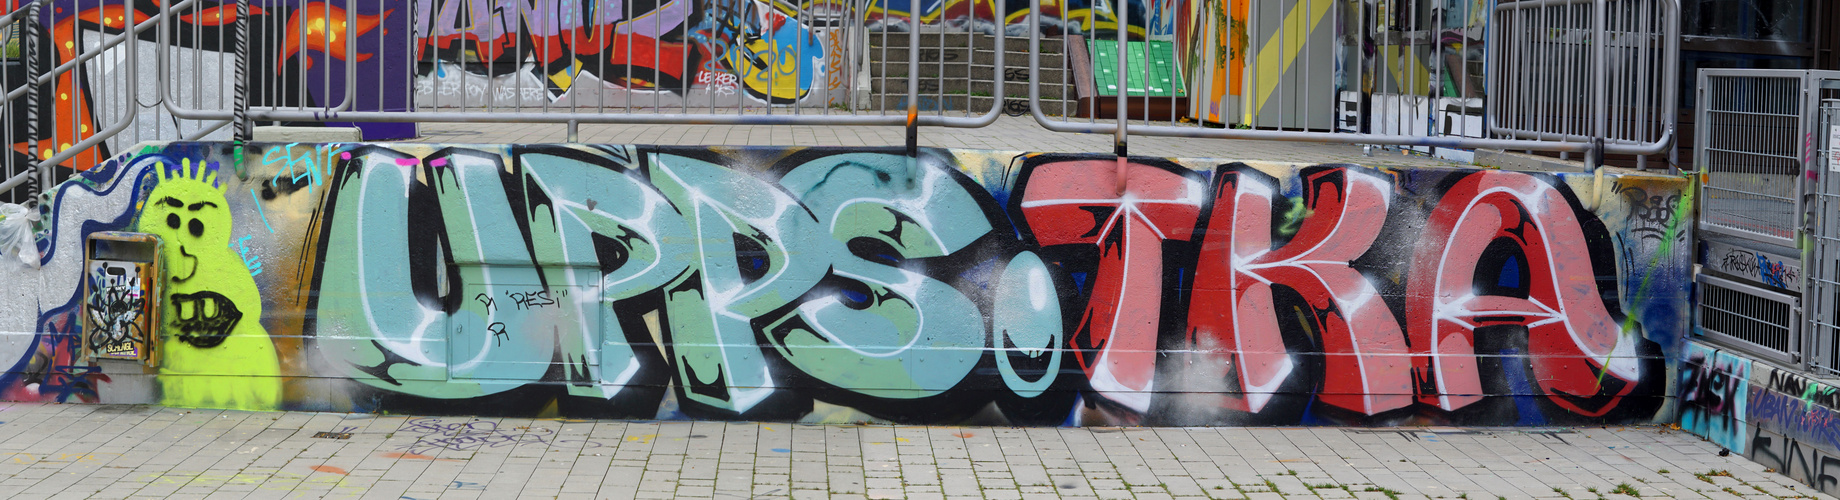 Neues Graffiti am HdJ               UJUC     Dimanche-libre   Sonntag-bunt